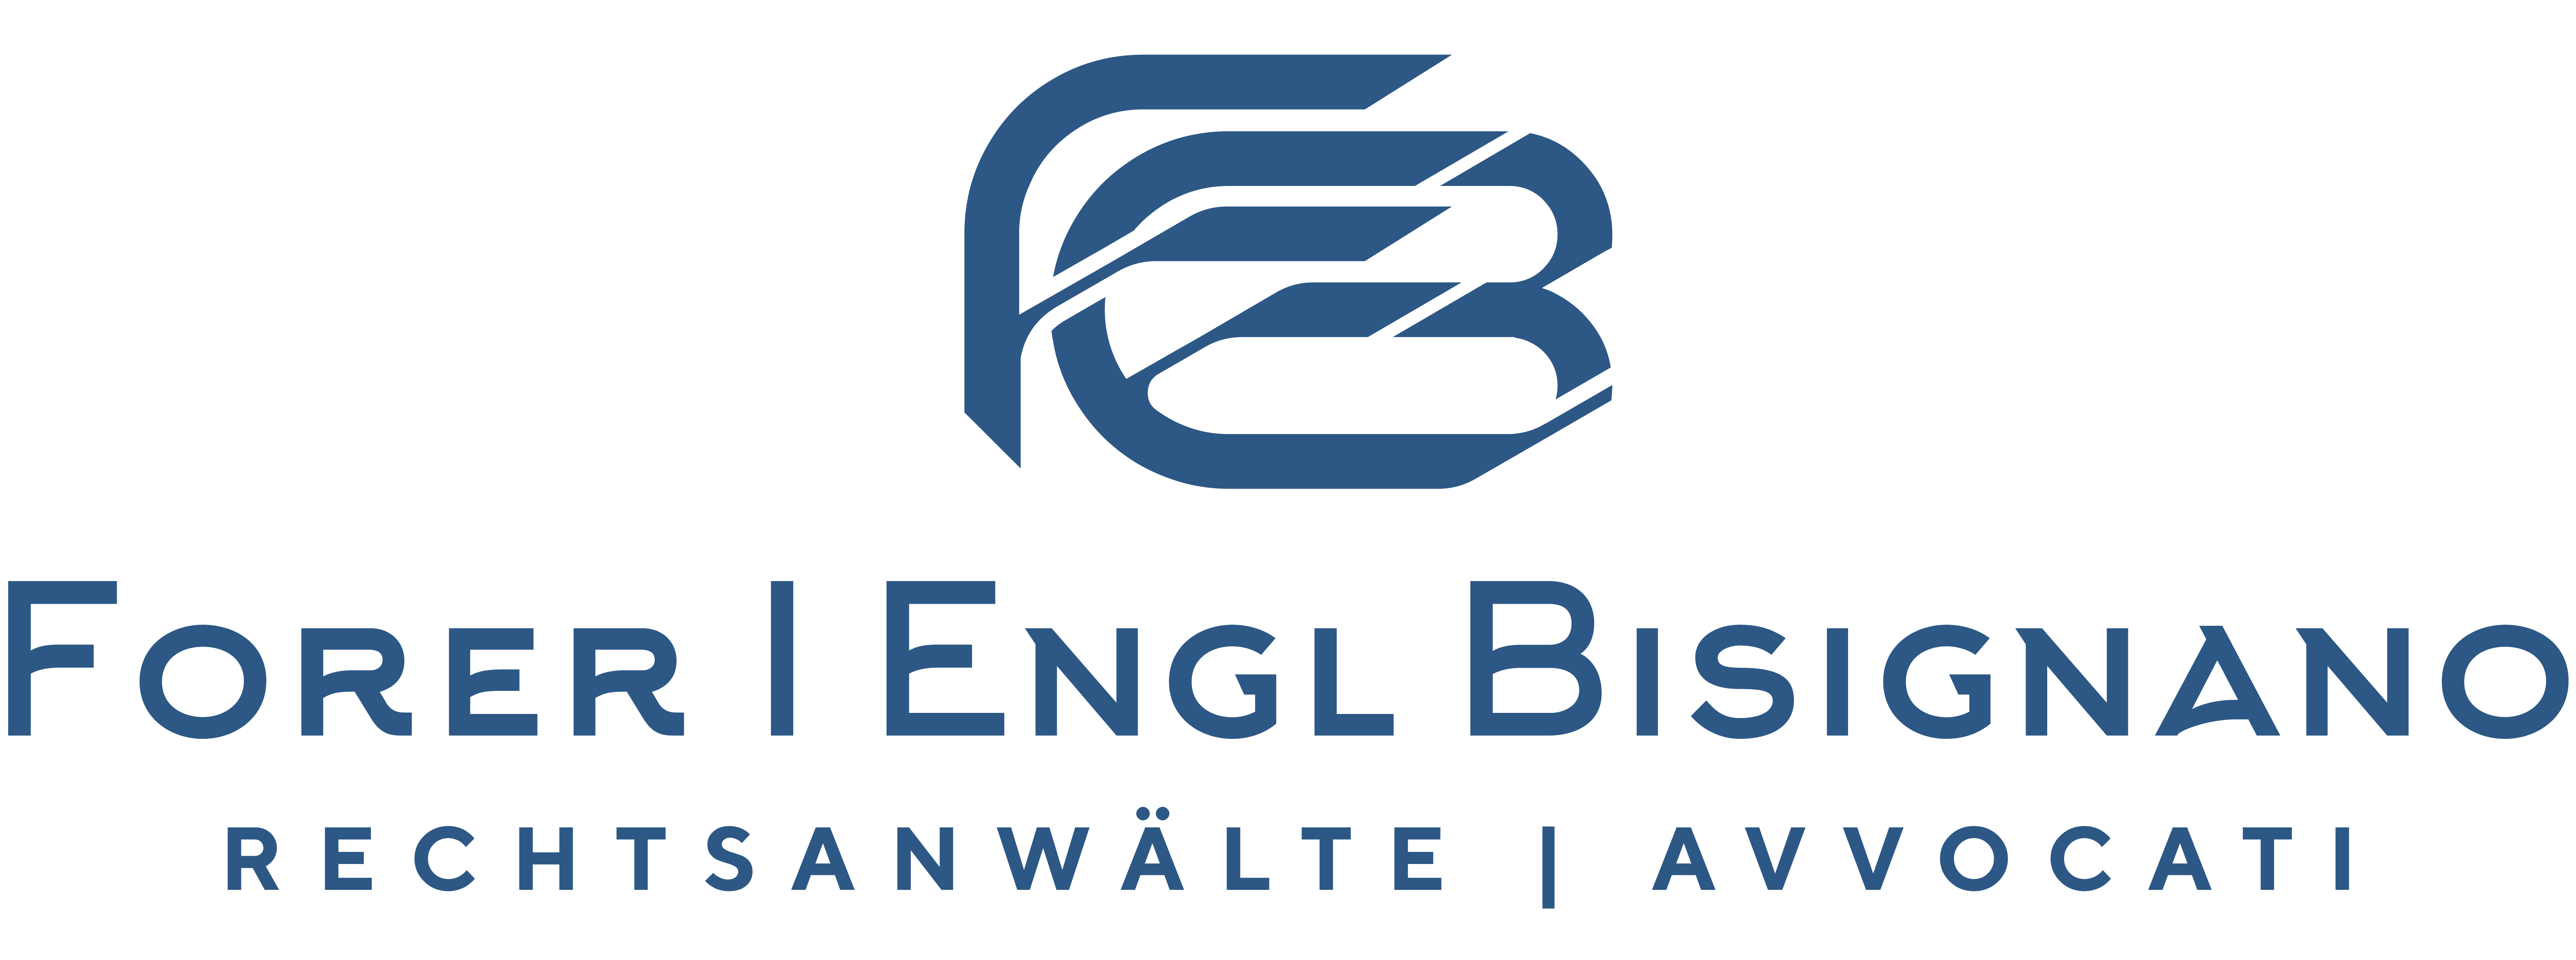 Forer | Engl Bisignano Rechtsanwälte Logo